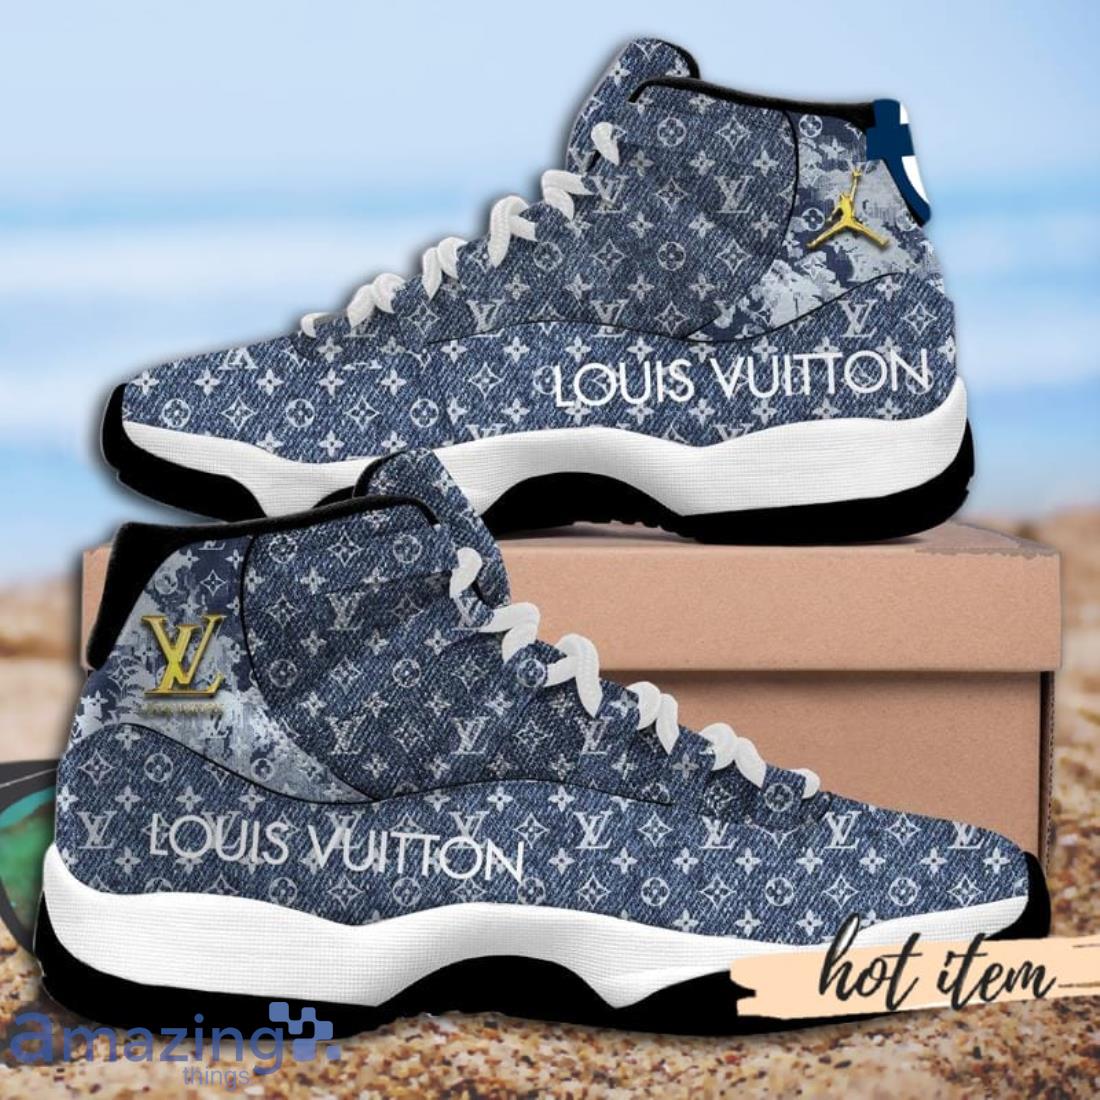 Louis Vuitton Ver 3 Air Jordan 11 Shoes Fashsion Shoes